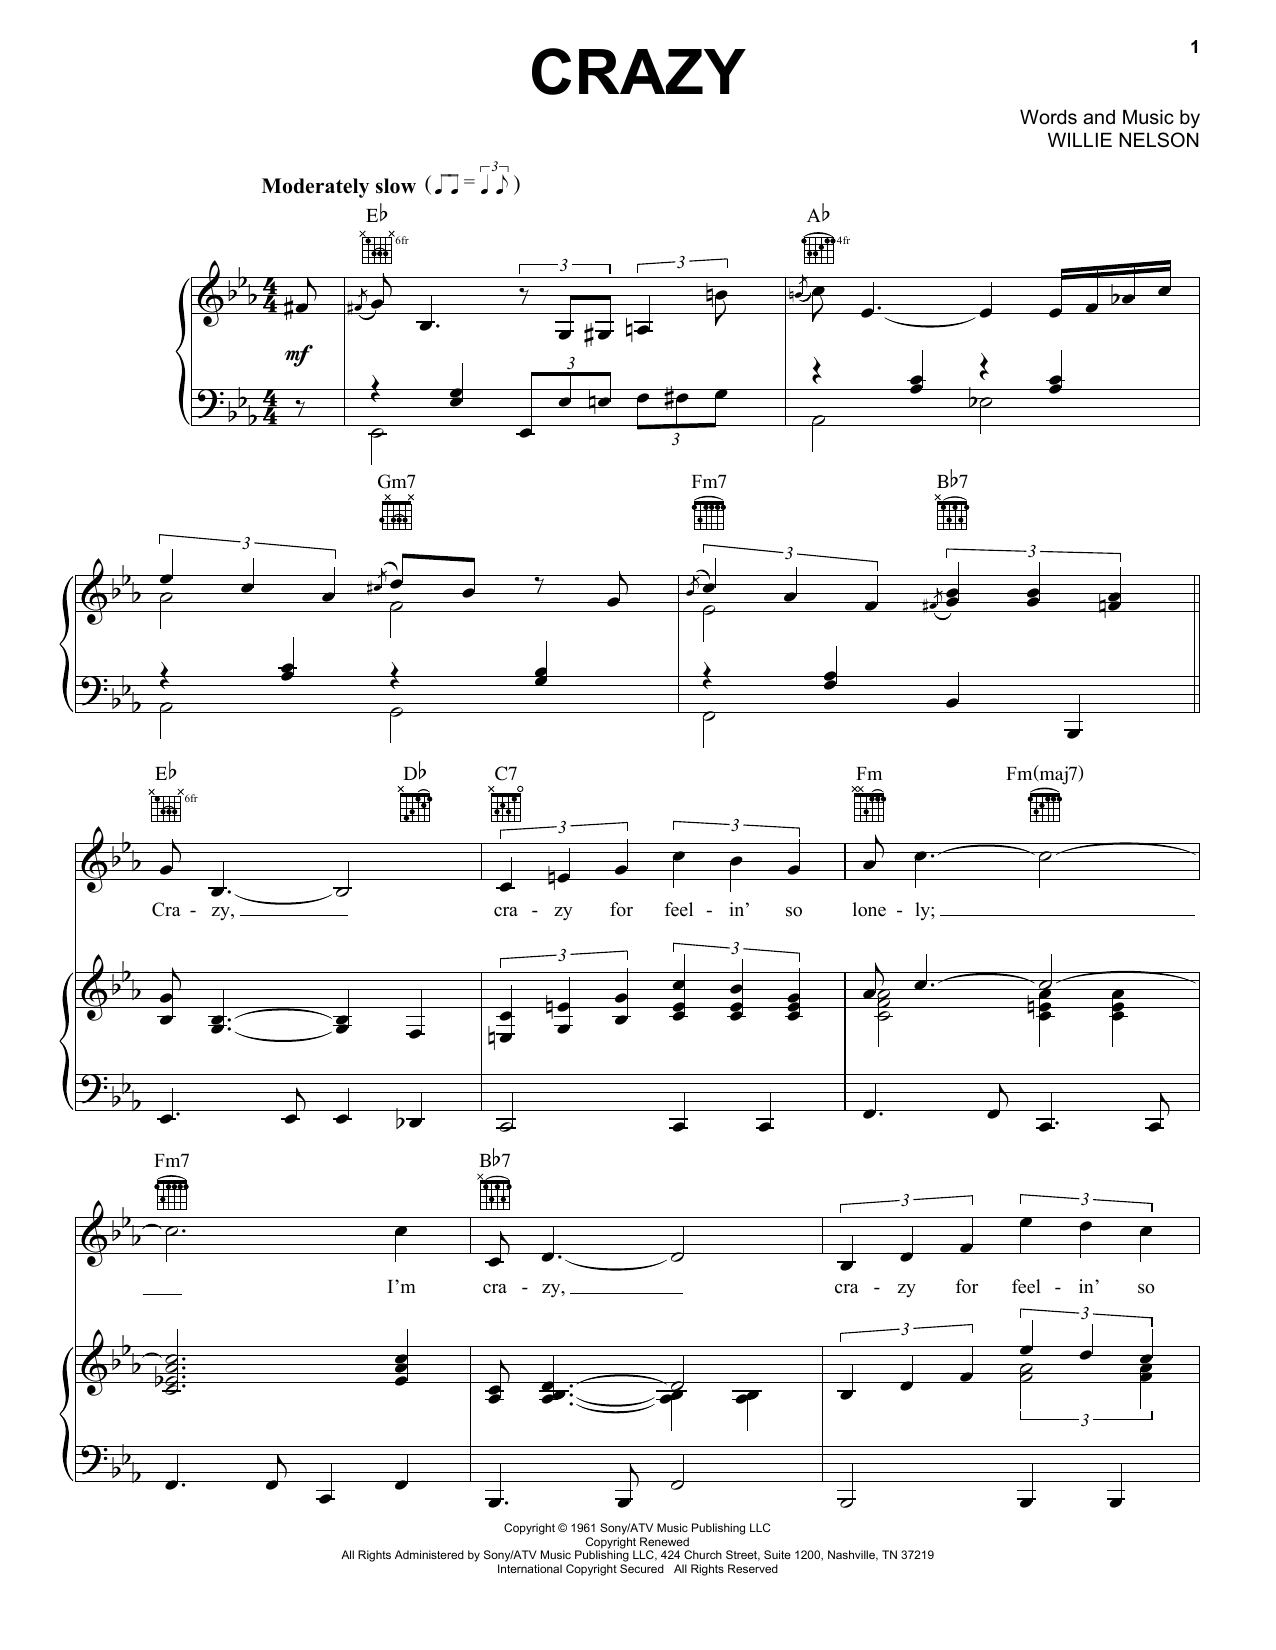 Patsy Cline Crazy sheet music notes printable PDF score